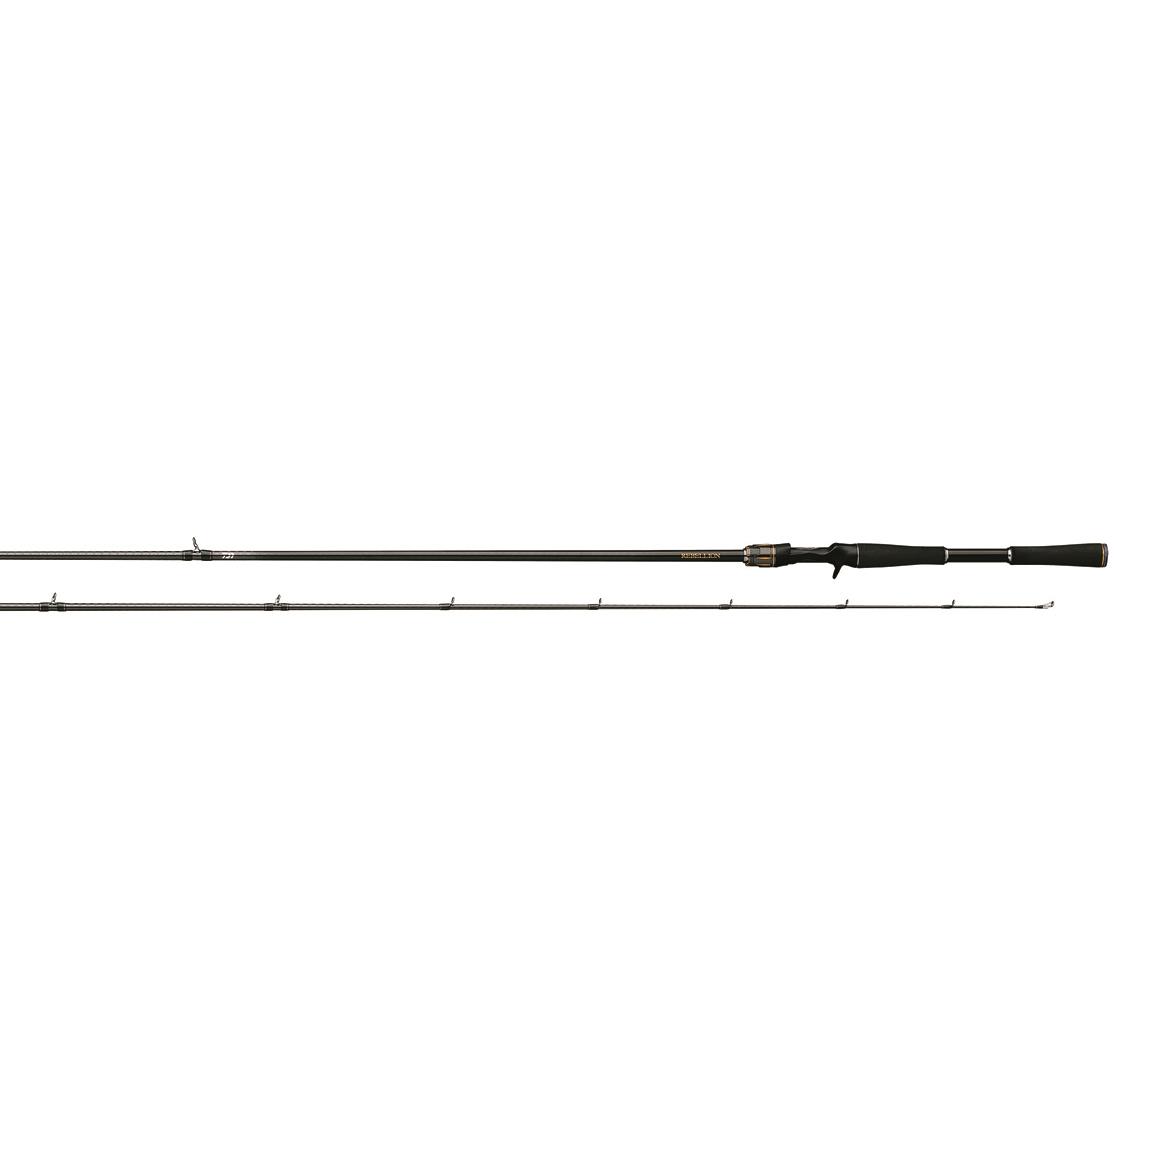 Daiwa Rebellion Casting Rod, 7'3" Length, Medium Heavy Power, Fast Action